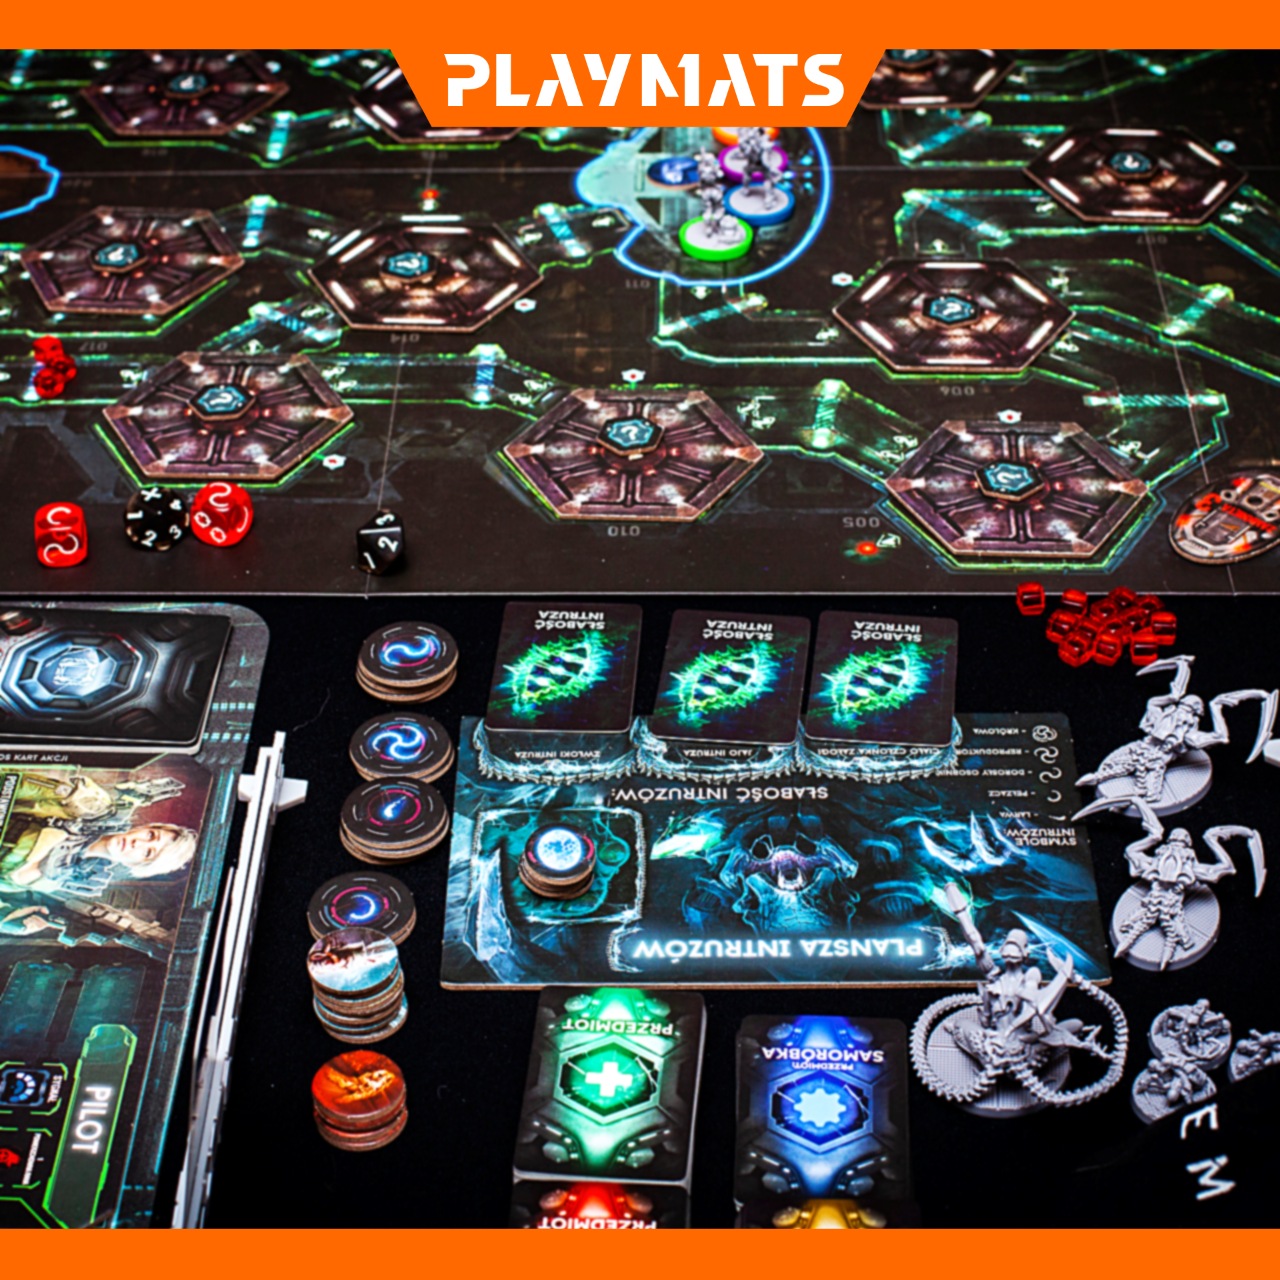 Nemesis board game set - example boardgame playmat layout